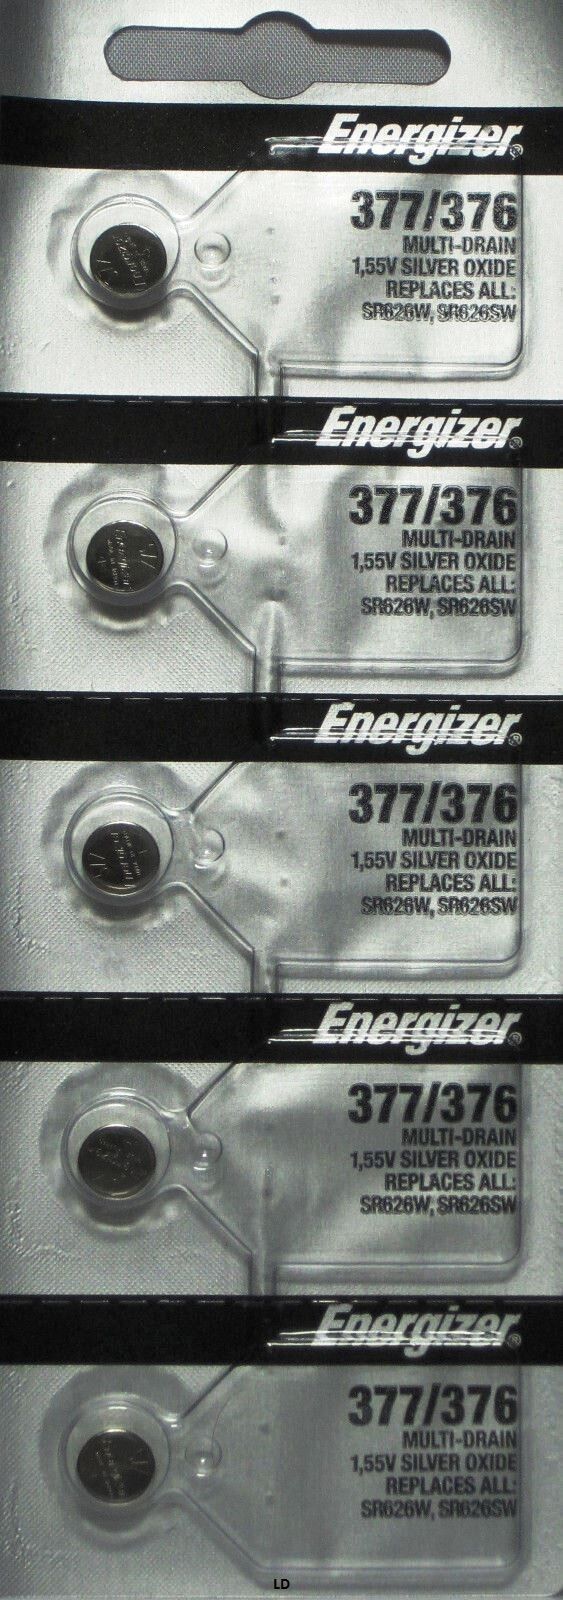 ENERGIZER 377/376 SR626SW SR626W (5 Piece) BATTERIES NEW SEALED Authorize Seller